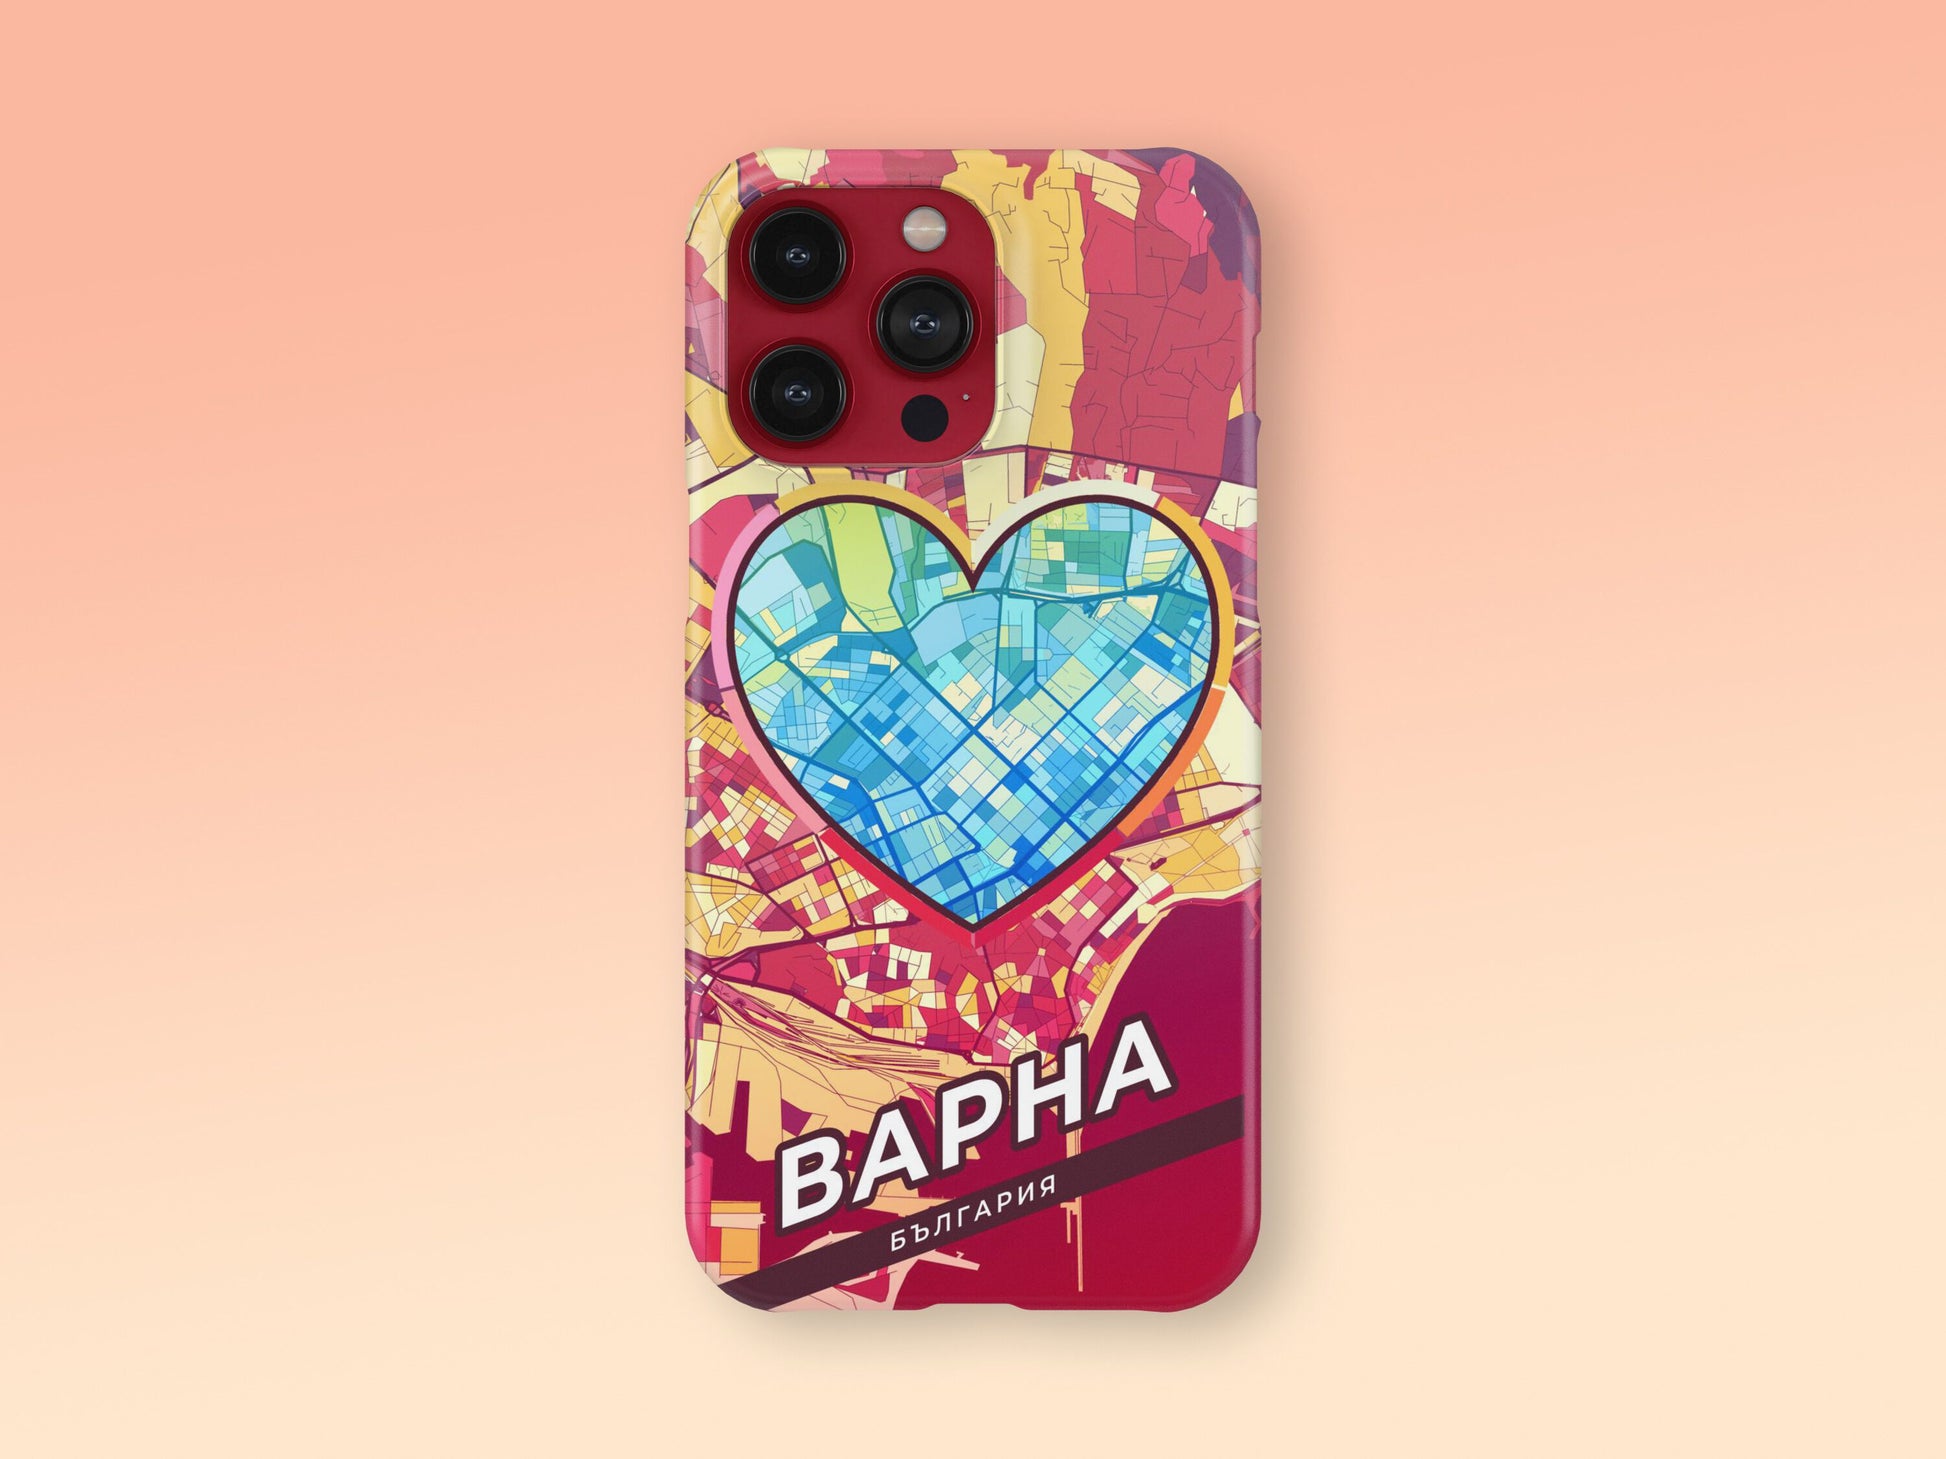 Варна България slim phone case with colorful icon. Birthday, wedding or housewarming gift. Couple match cases. 2